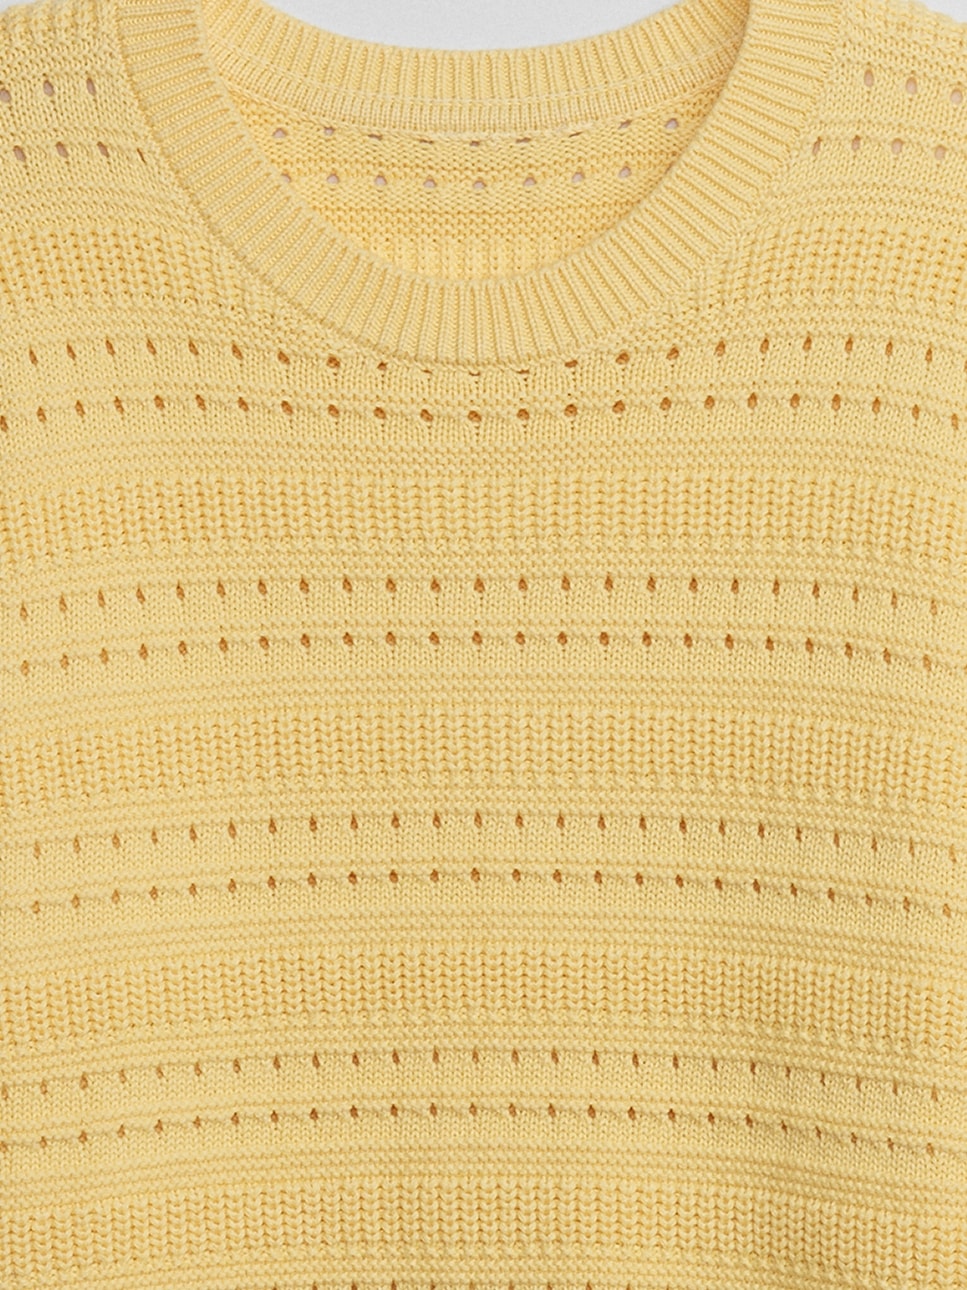 24/7 Split-Hem Polo Sweater